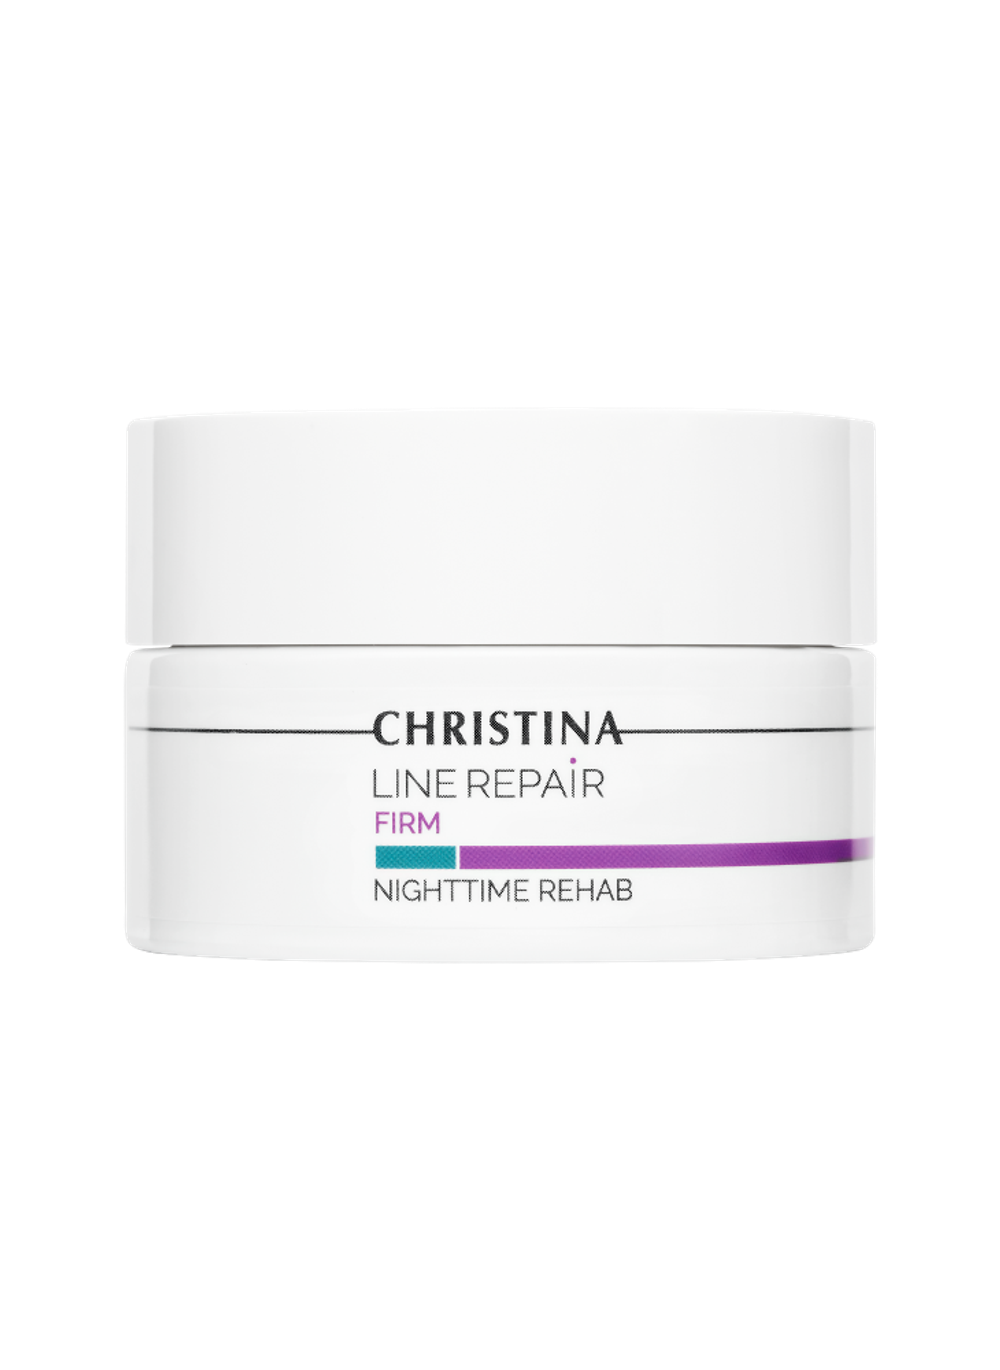 CHRISTINA Line Repair Firm Nighttime Rehab